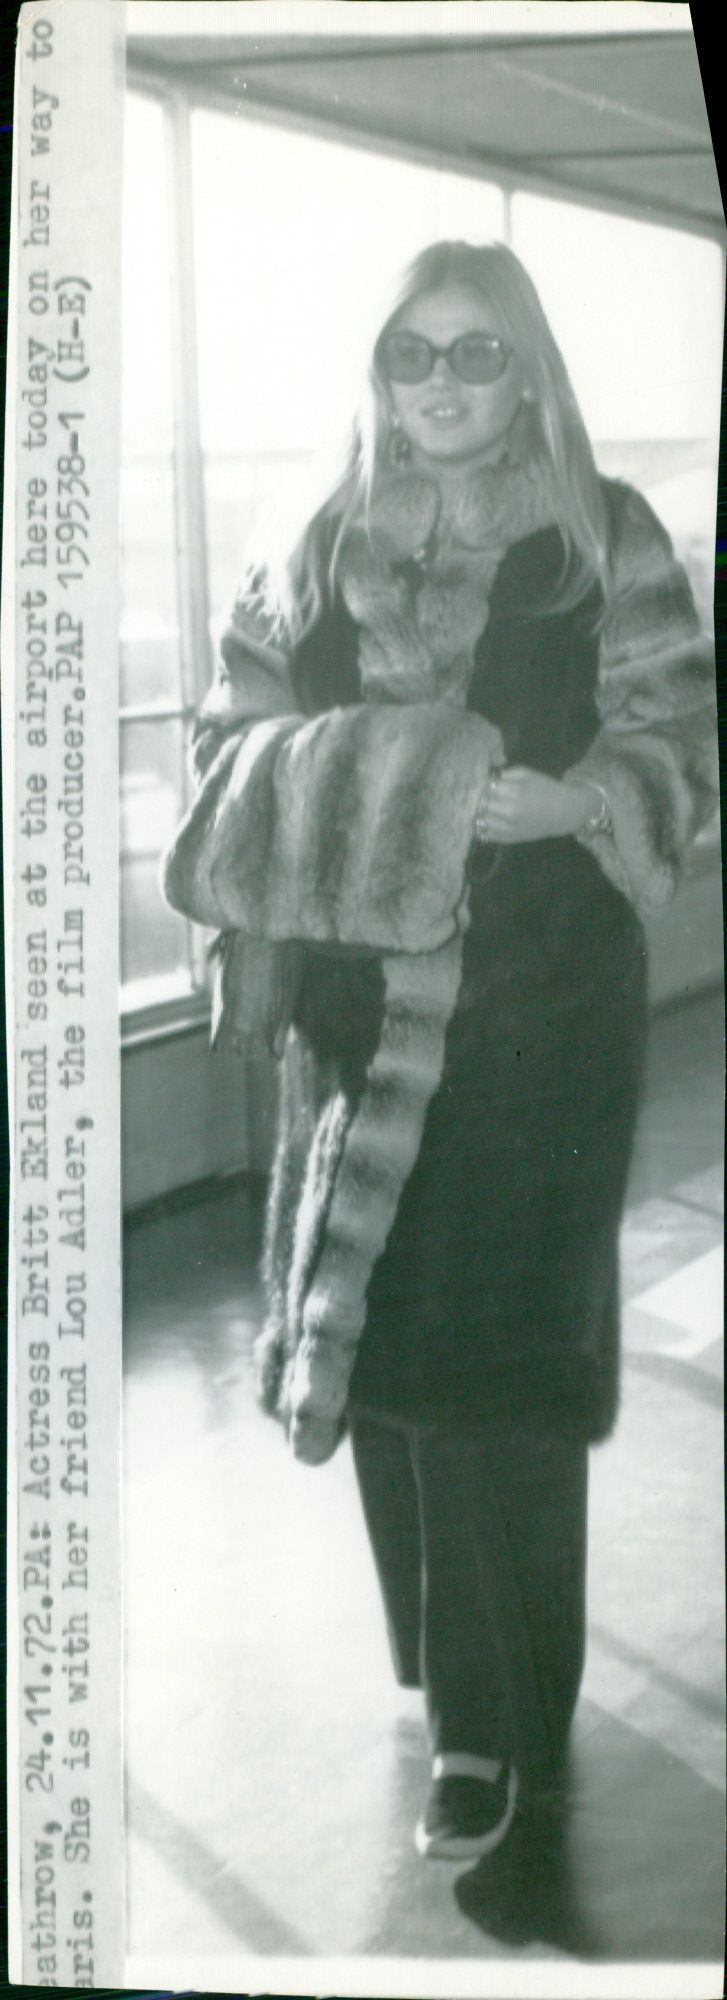 Actress Britt Ekland photographed at Heathrow Airport - Vintage Photograph